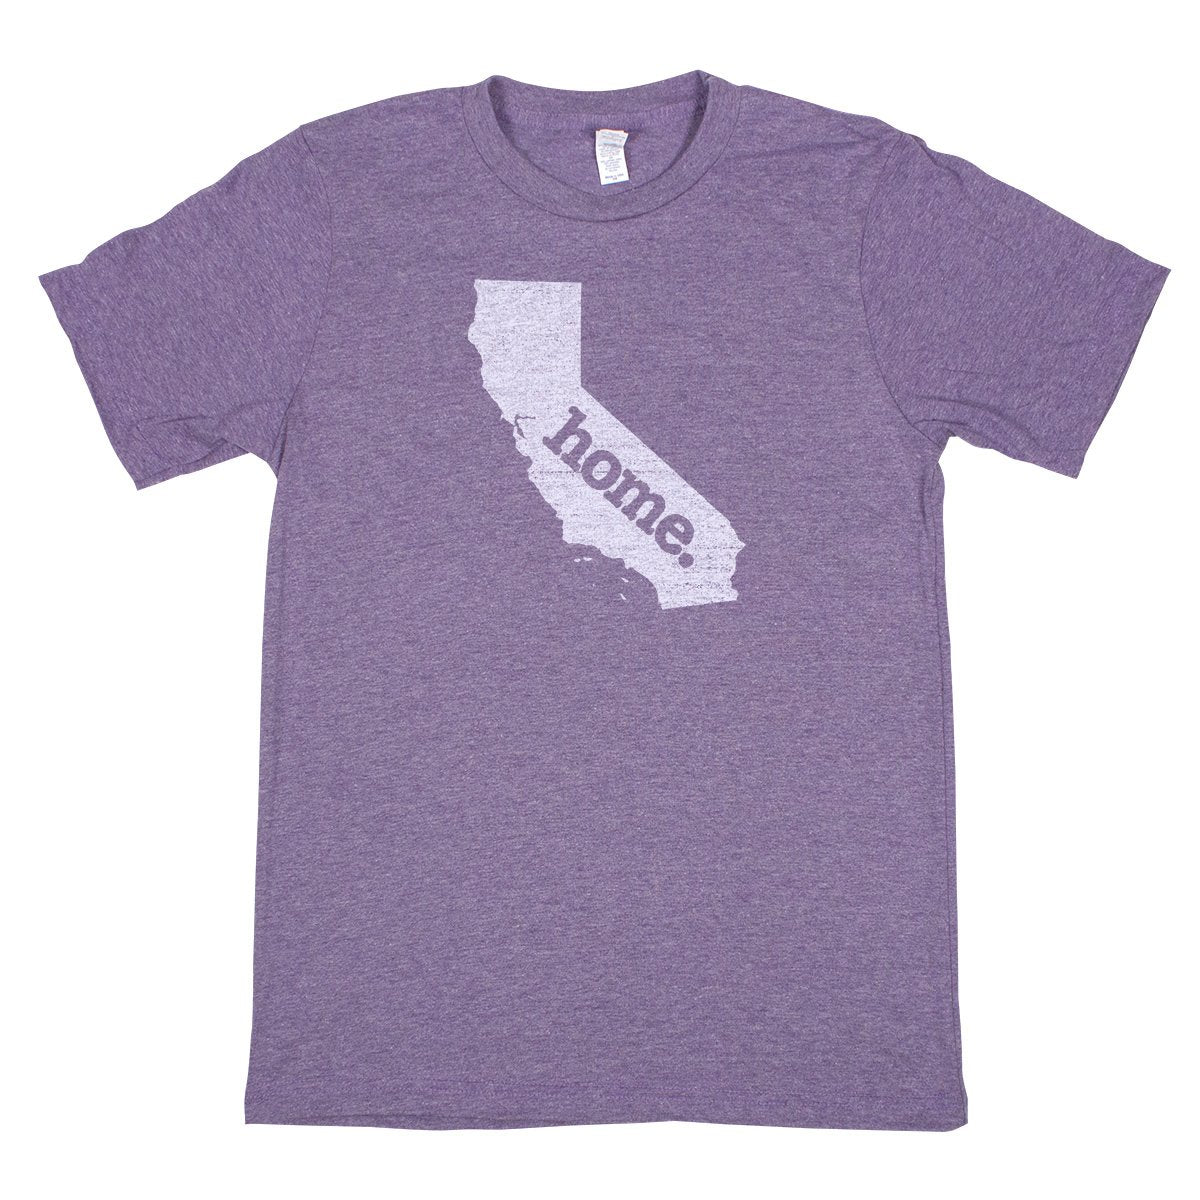 home. Men’s Unisex T-Shirt - Missouri